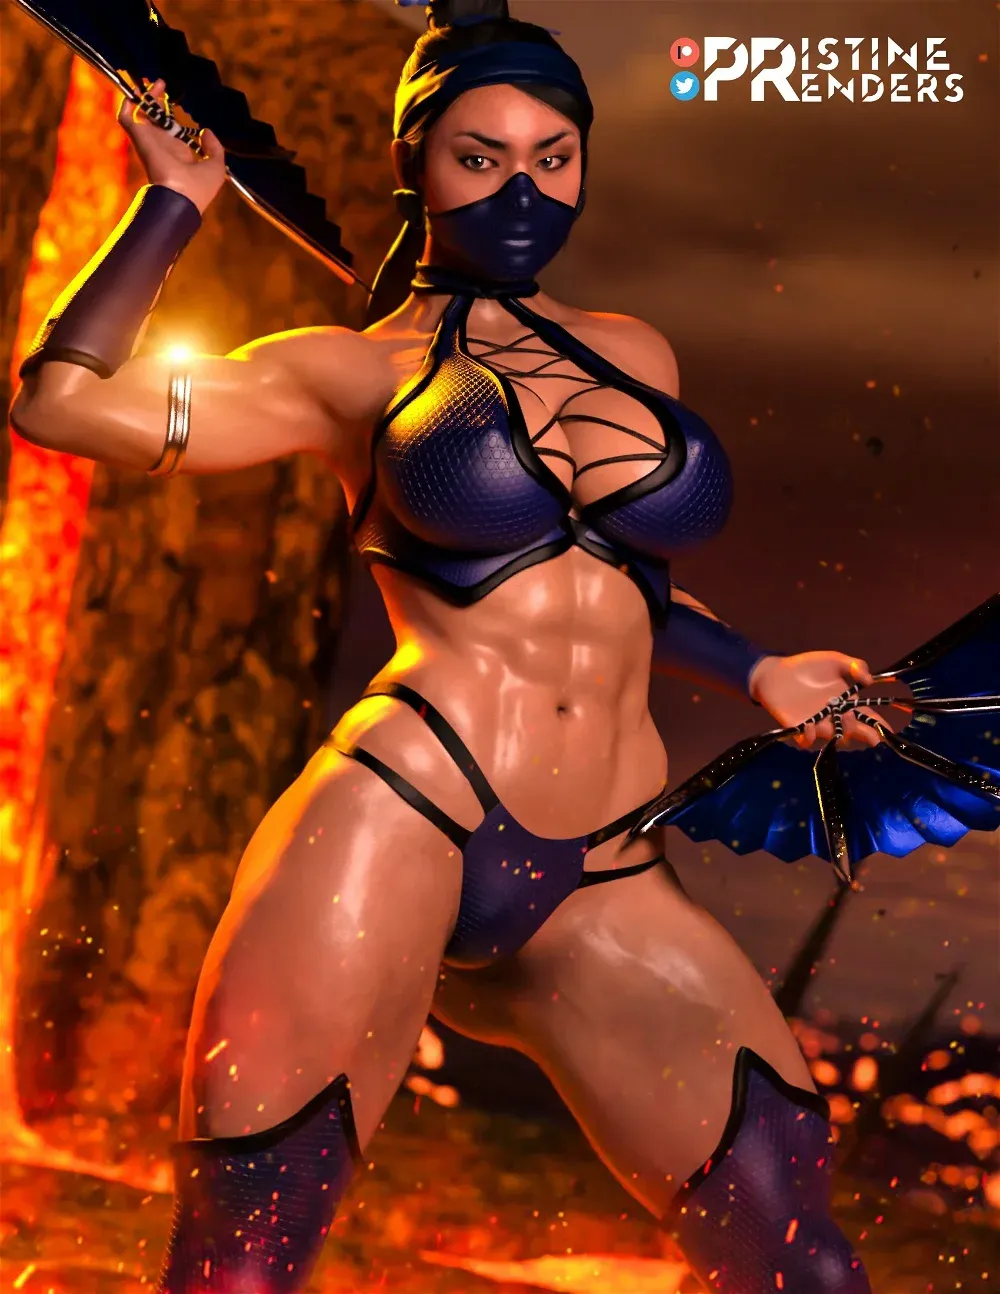 Avatar of Kitana (Mortal Kombat)